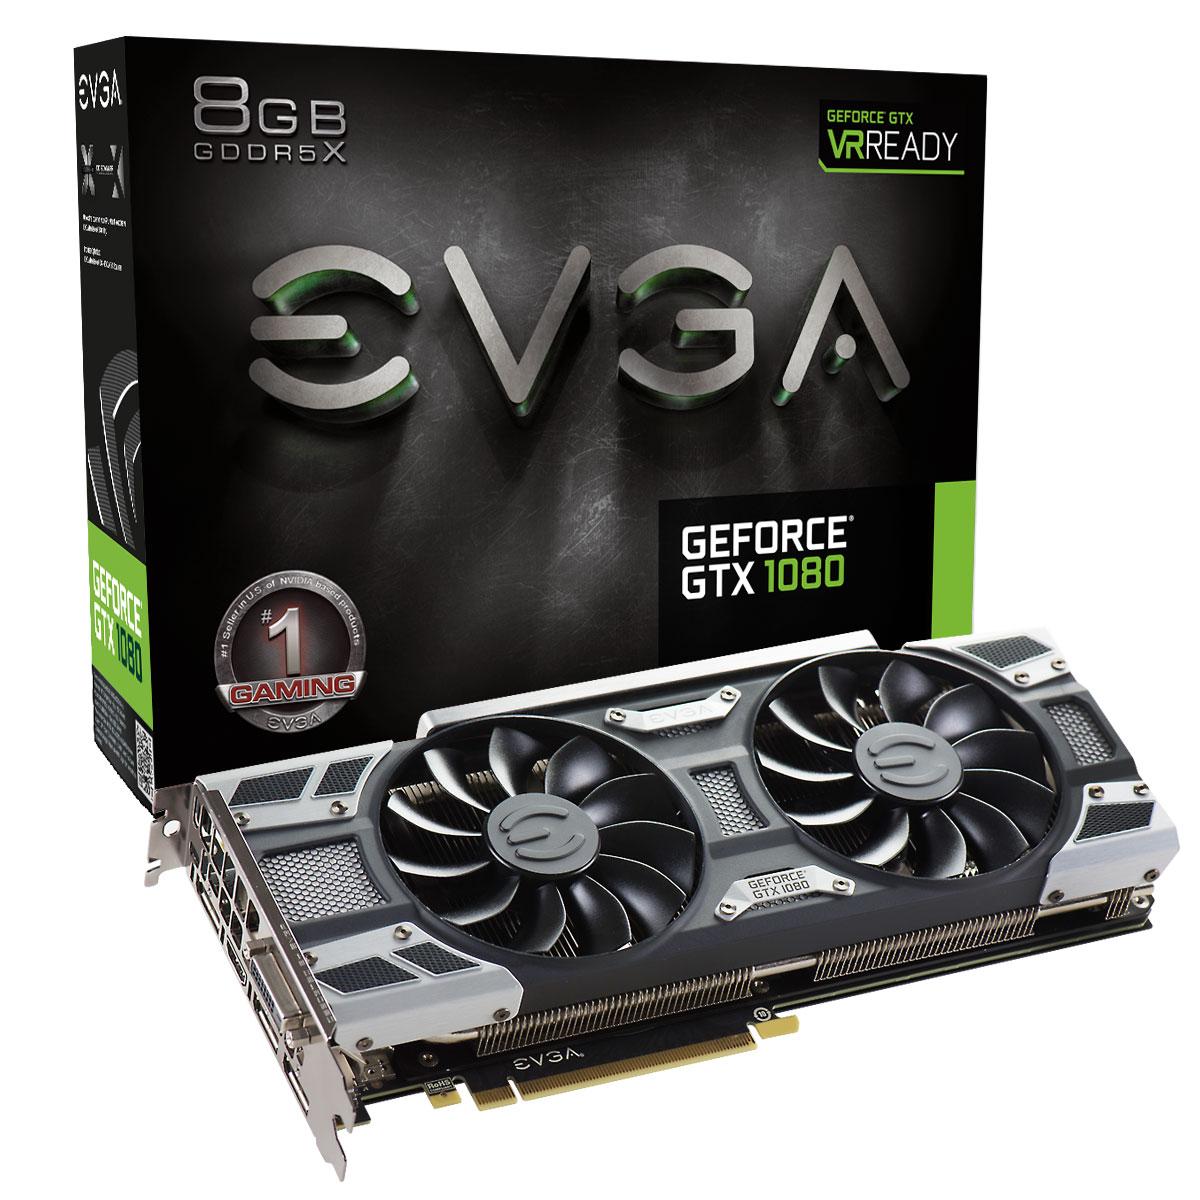 EVGA GeForce GTX 1080 8 GB GeForce 1000 Series